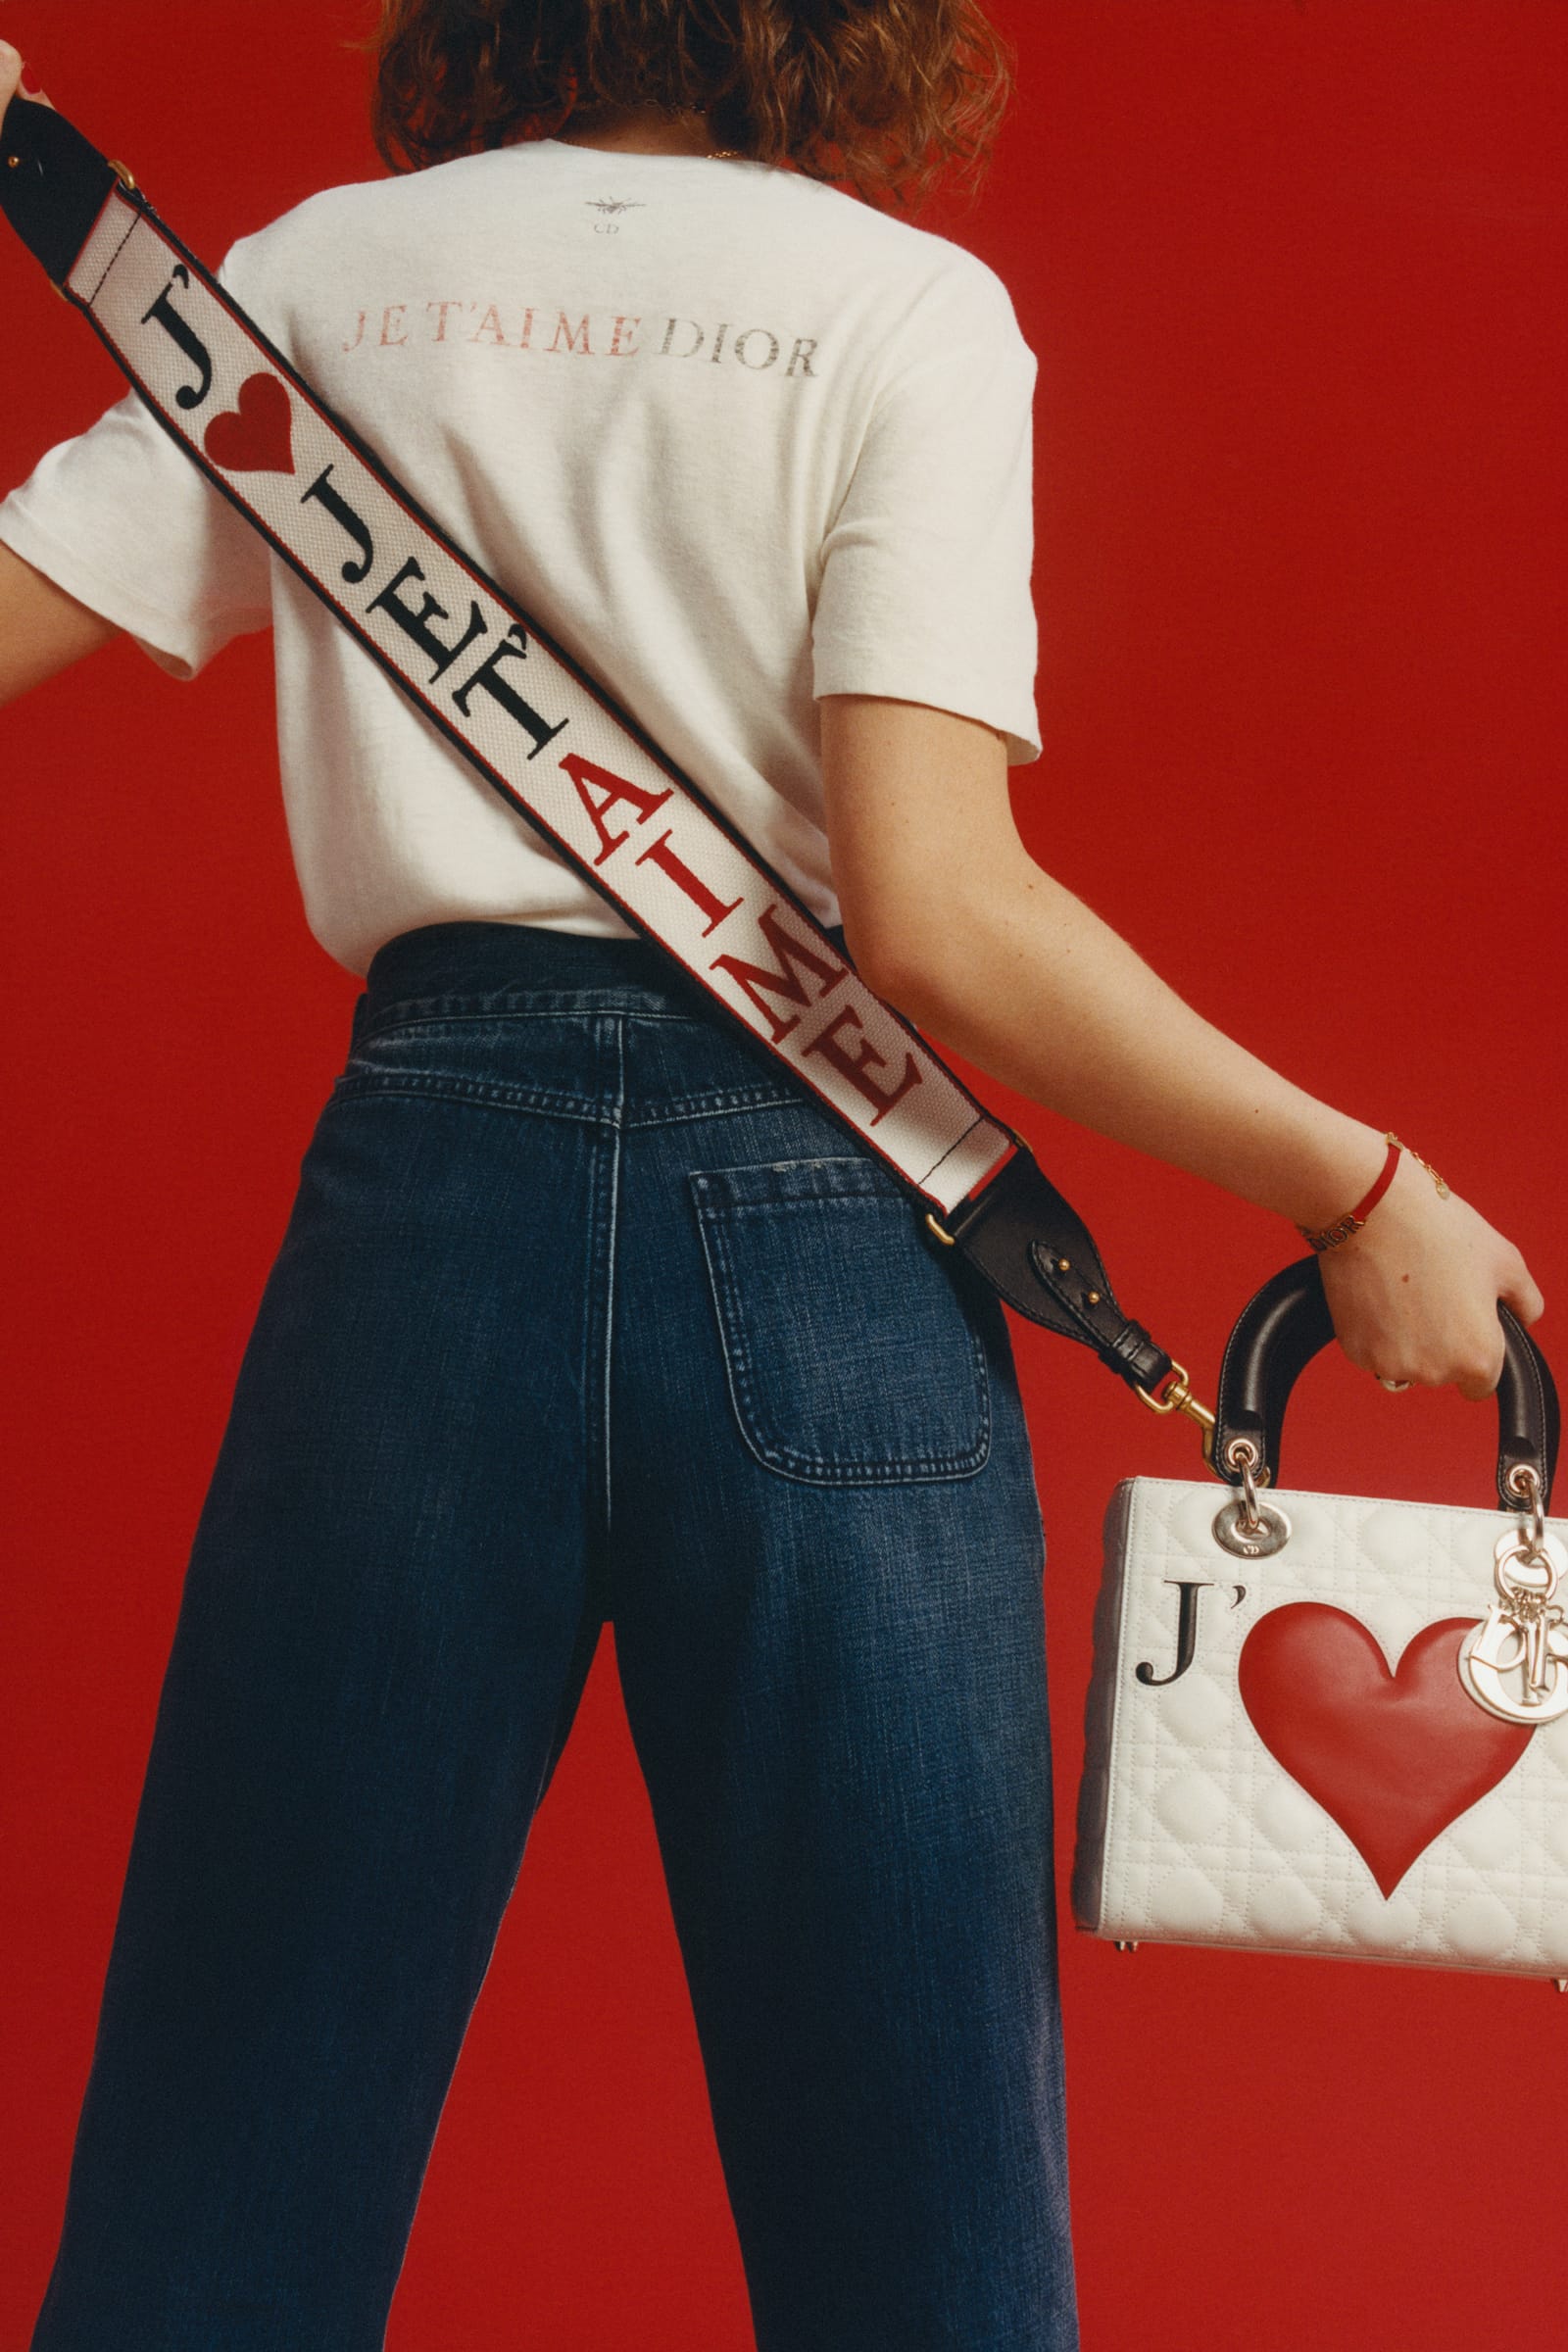 Shop Dior Chinese Valentine's Day Dioramour Line | HYPEBAE